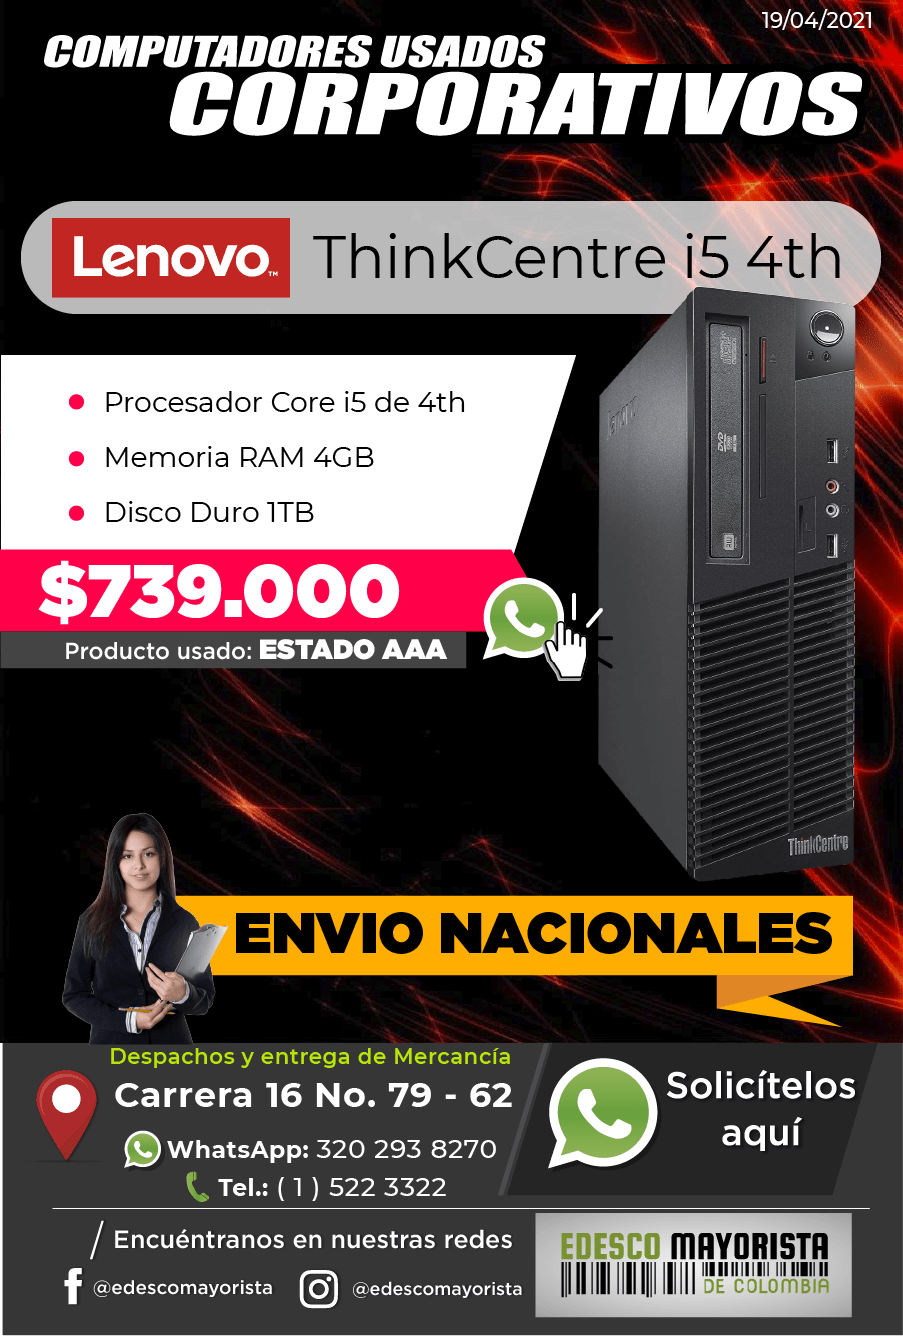 Torre Lenovo ThinkCentre i5 4th